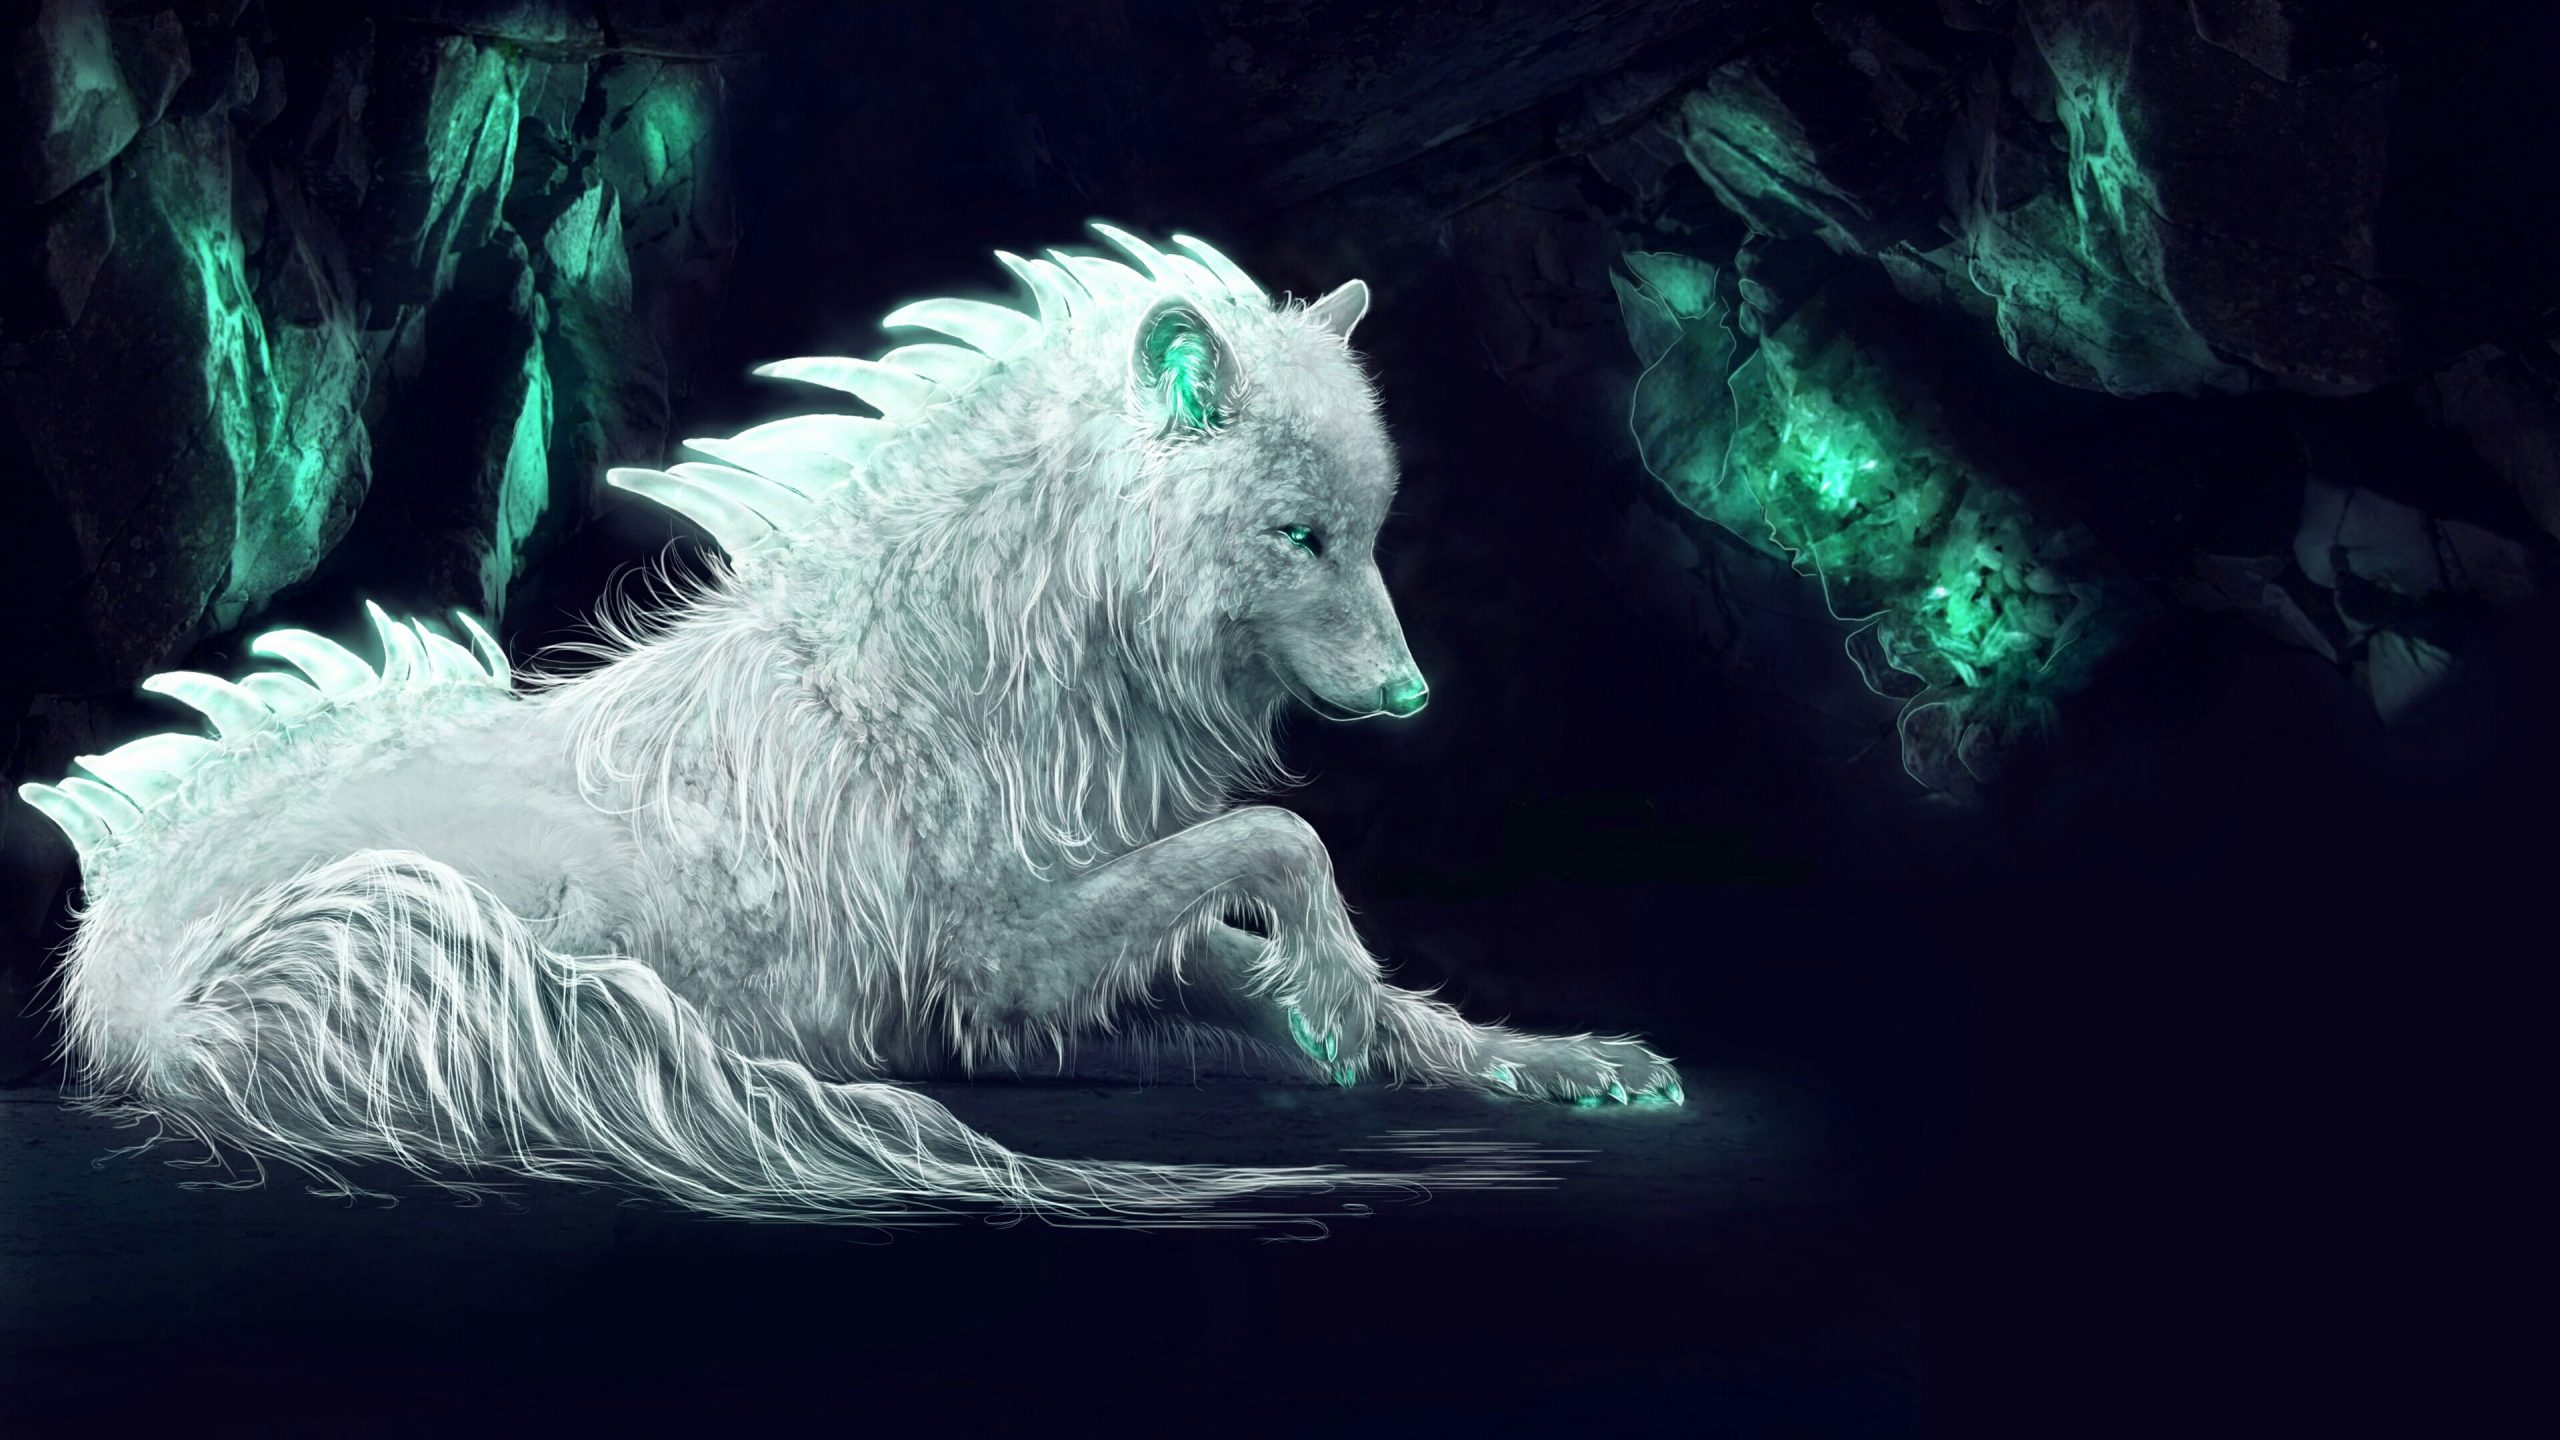 Darkness wallpaper, wolf, white wolf, fantasy art, imagination, mythical creature